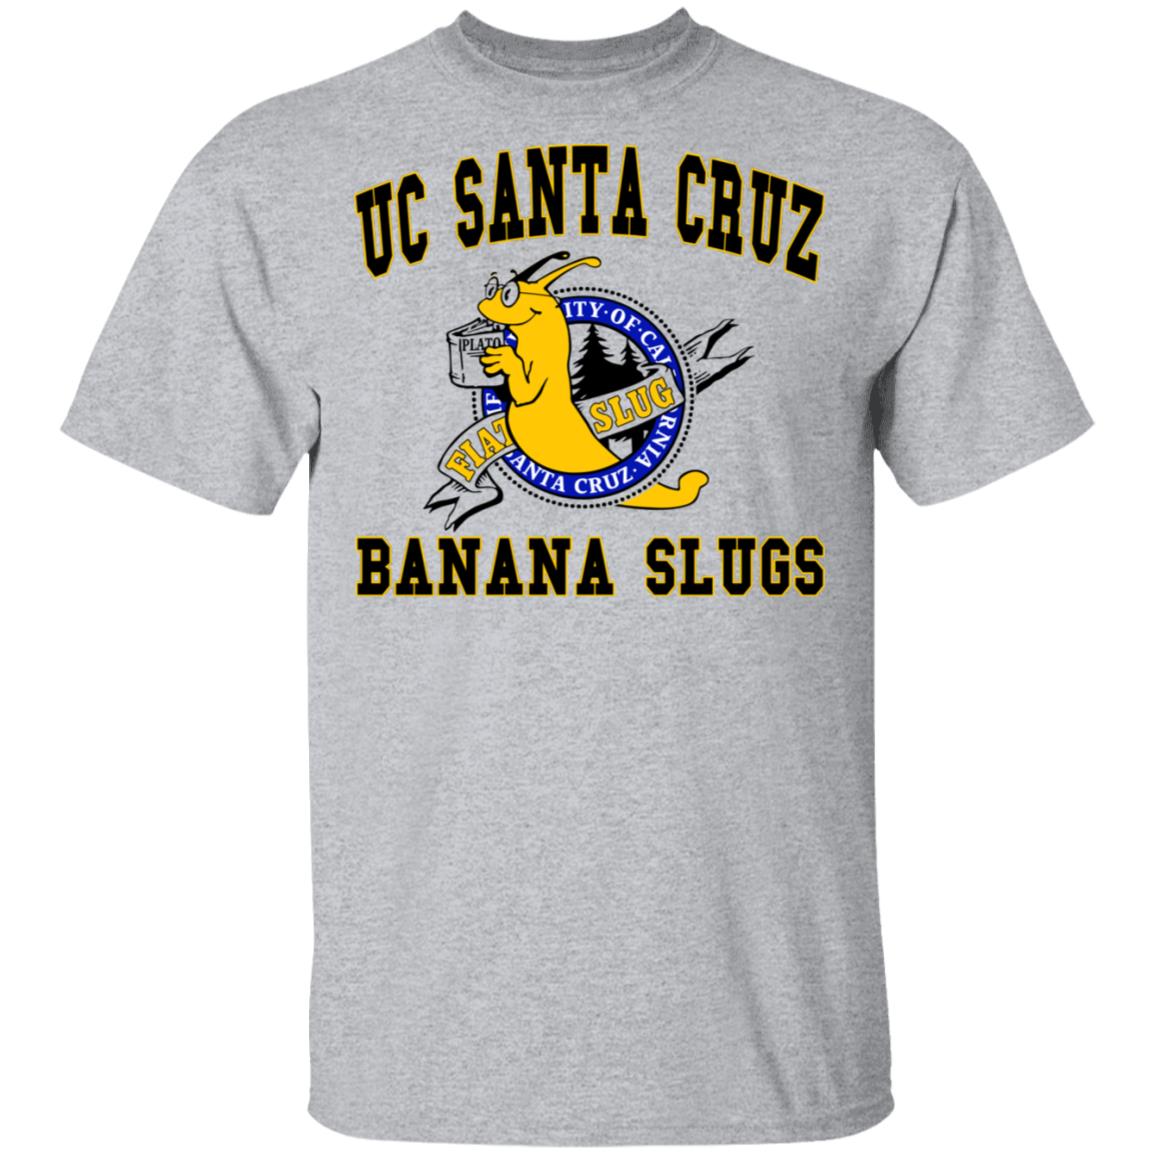 UC Santa Cruz Banana Slugs Shirt | El Real Tex-Mex